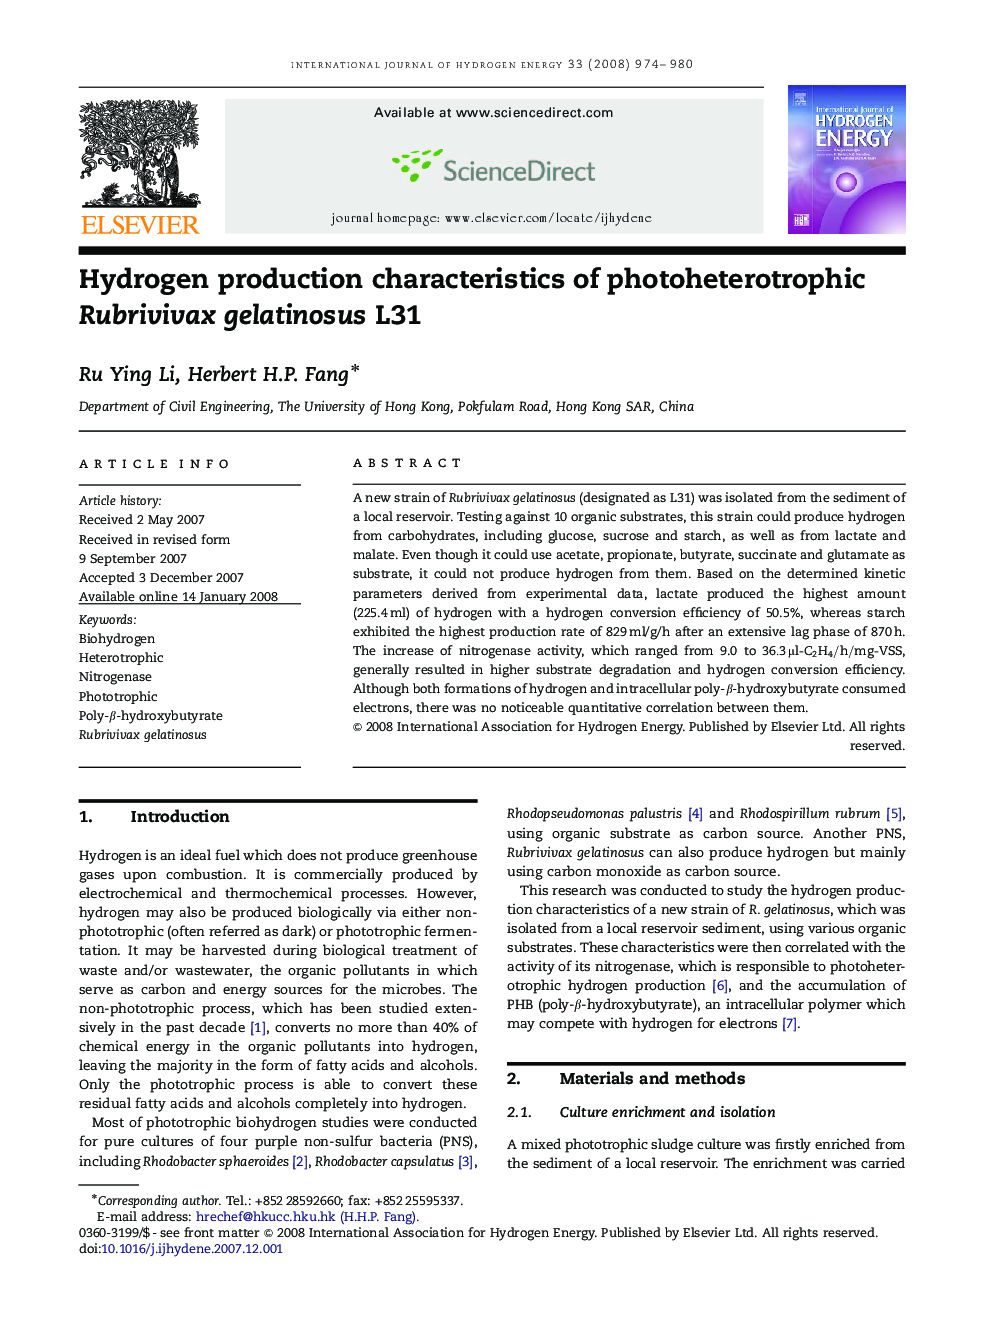 Hydrogen production characteristics of photoheterotrophic Rubrivivax gelatinosus L31